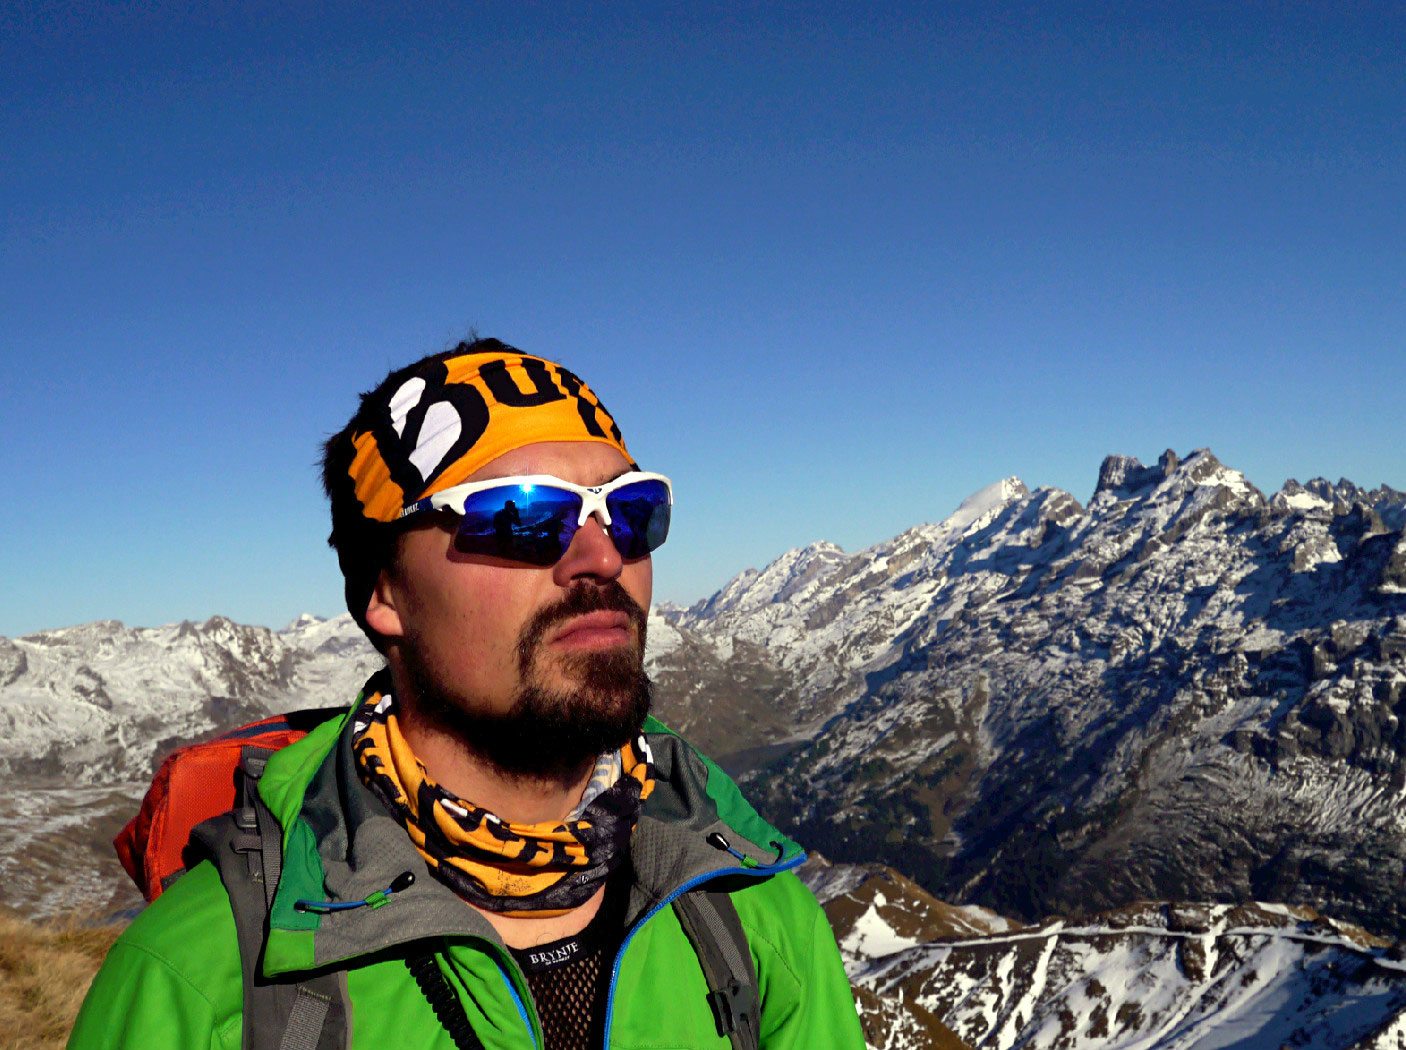 Blog | Solobestigning af Khan Tengri (7010m)